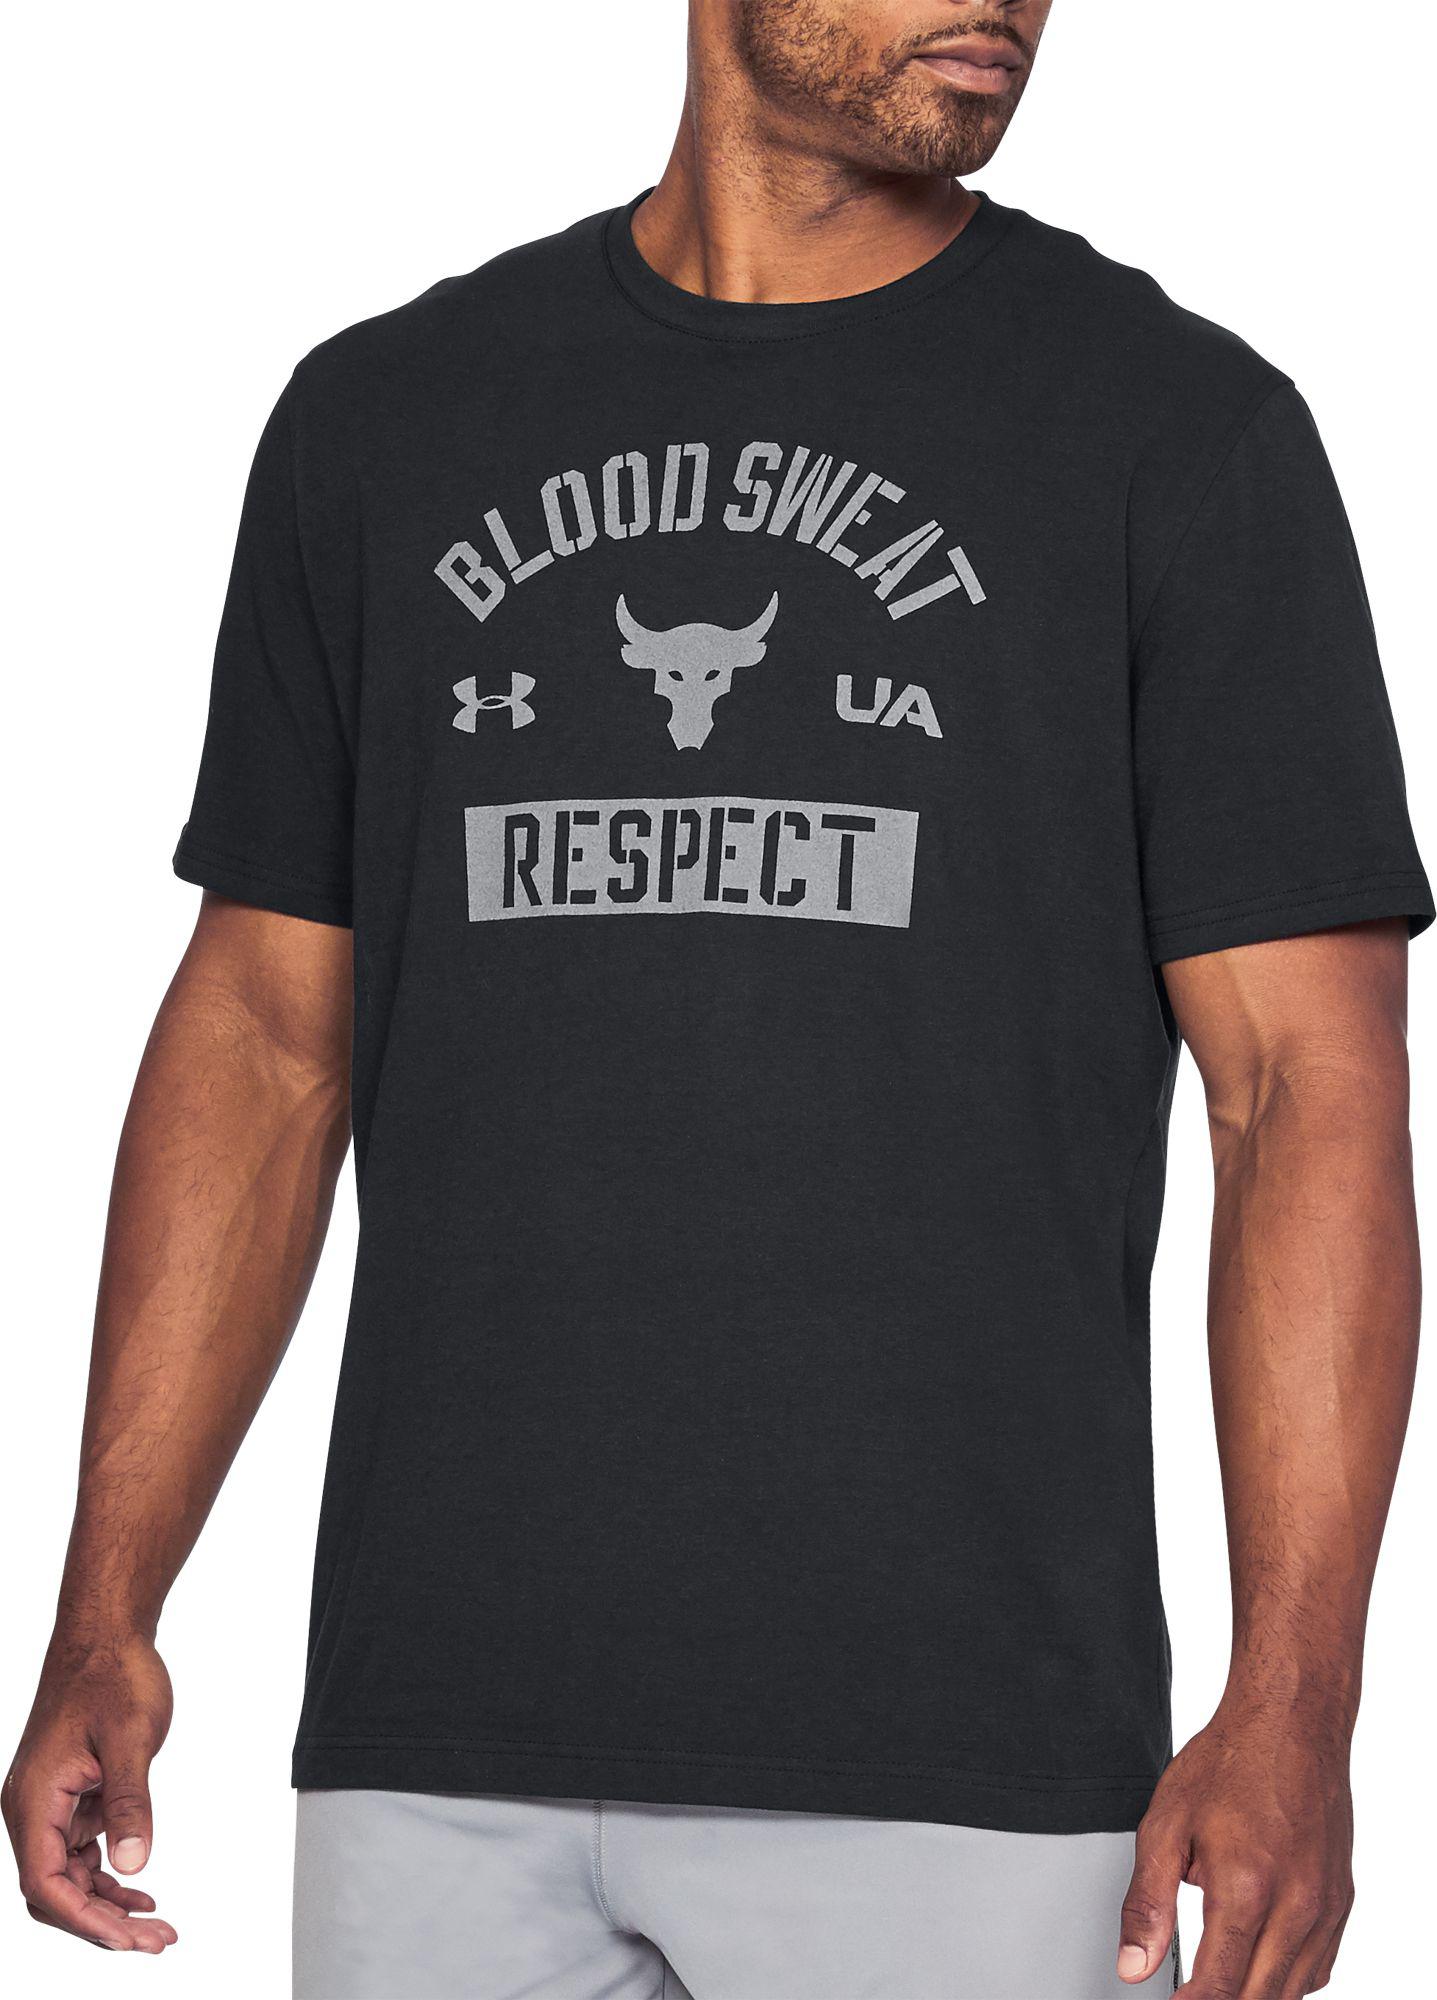 Under armour Herren X Project Rock Blood Sweat Respect T-Shirt Top 1326387 001